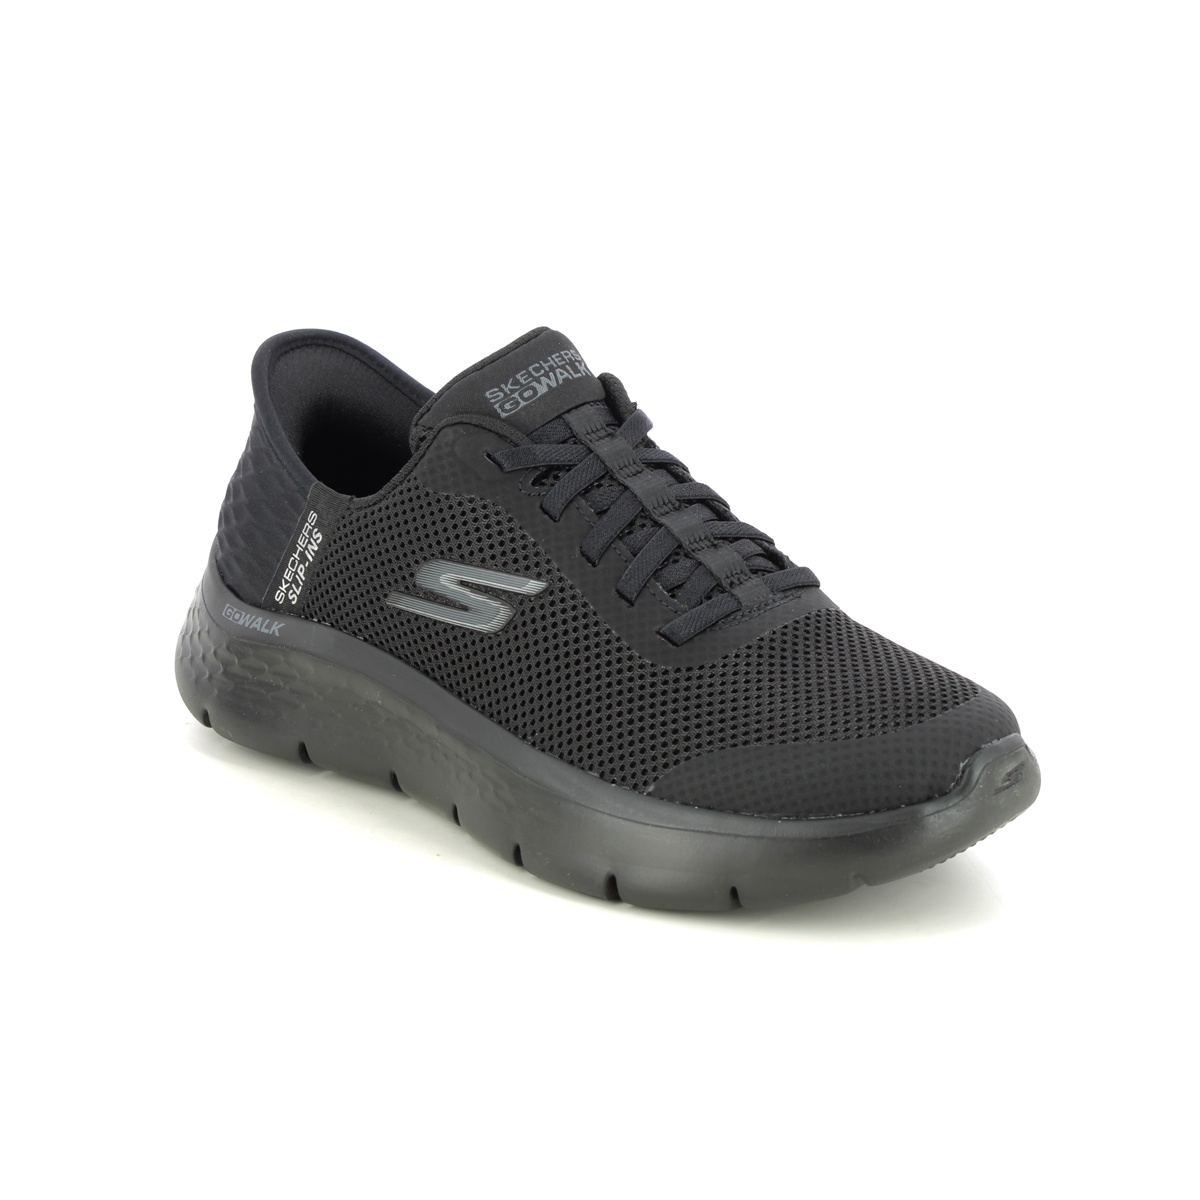 Skechers Slip Ins Go Walk Bungee BBK Black Womens trainers 124836 in a Plain Textile in Size 6.5